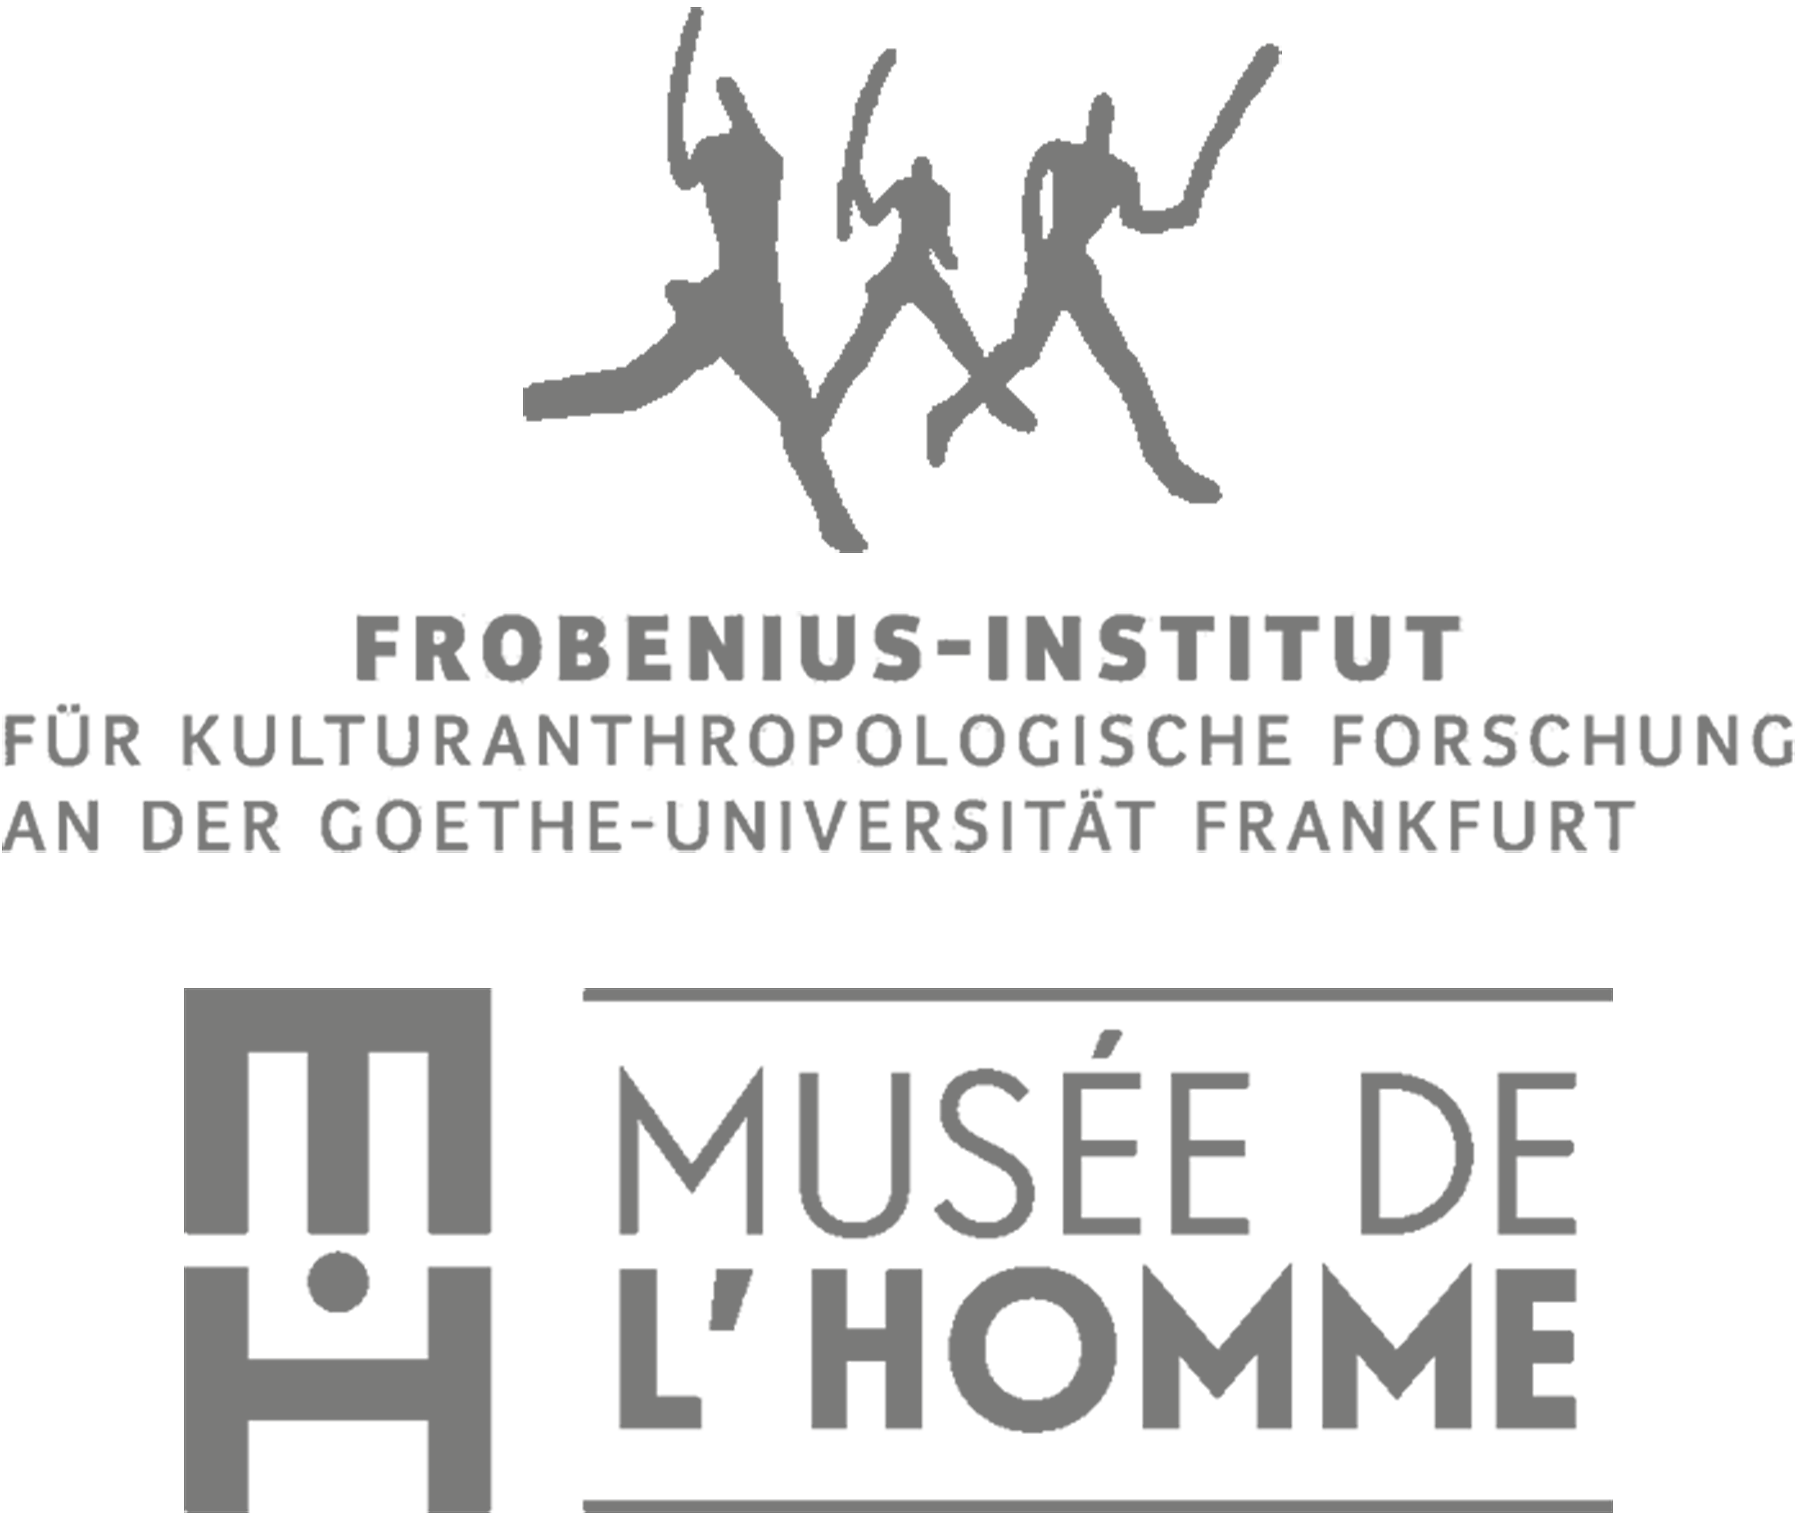 Préhistomania Musée de l'homme in Paris, in collaboration with the Frobenius Institute in Frankfurt